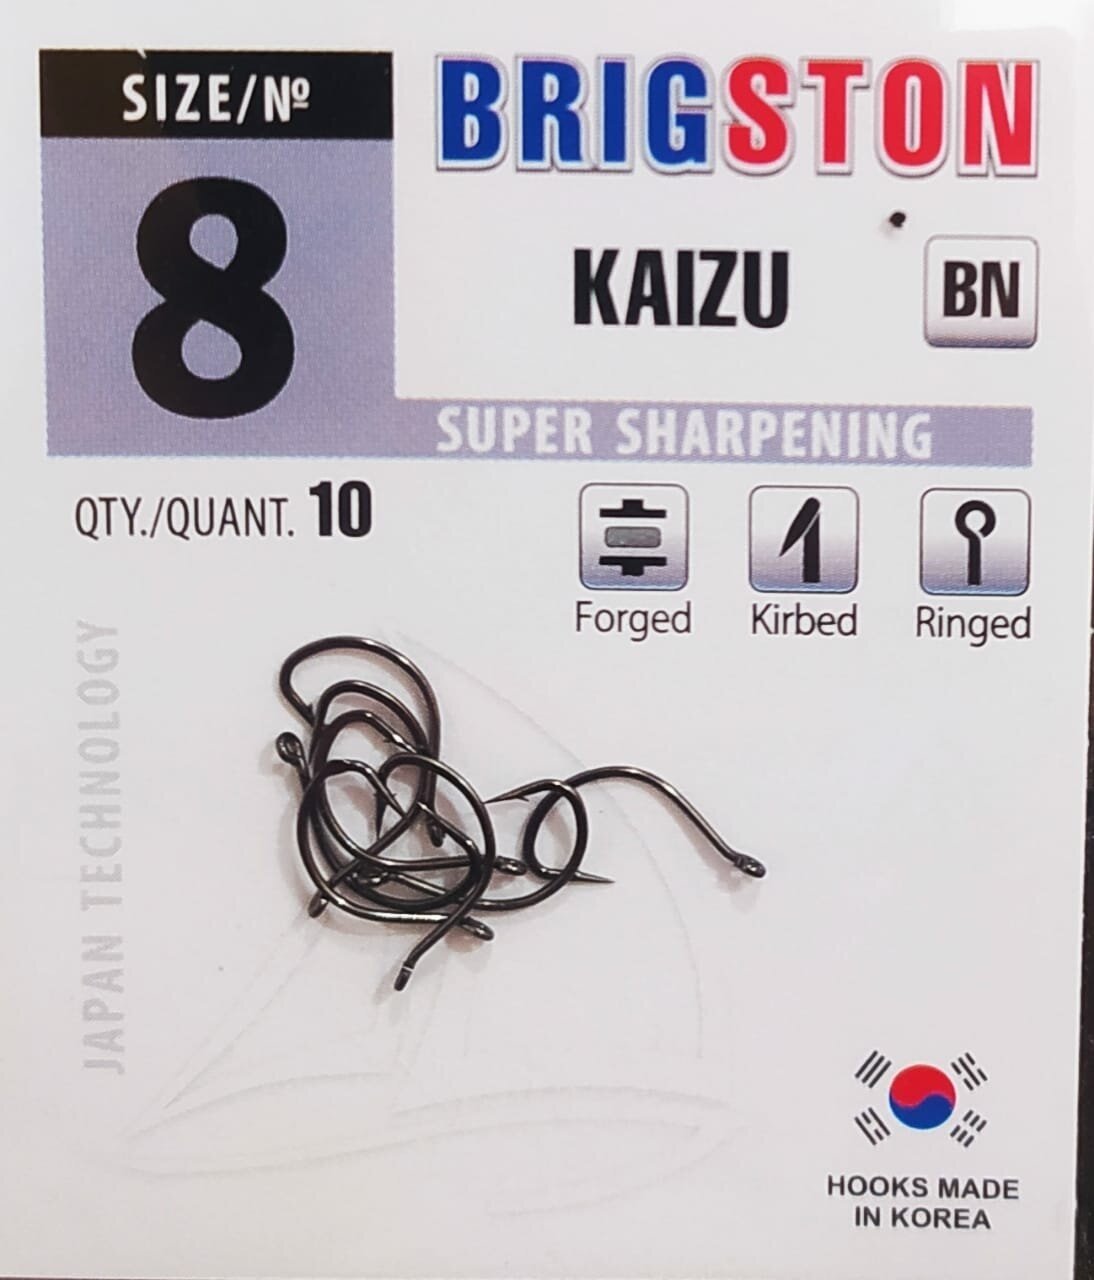 Рыболовные крючки Brigston Kaizu (BN) №8 упаковка 10 штук